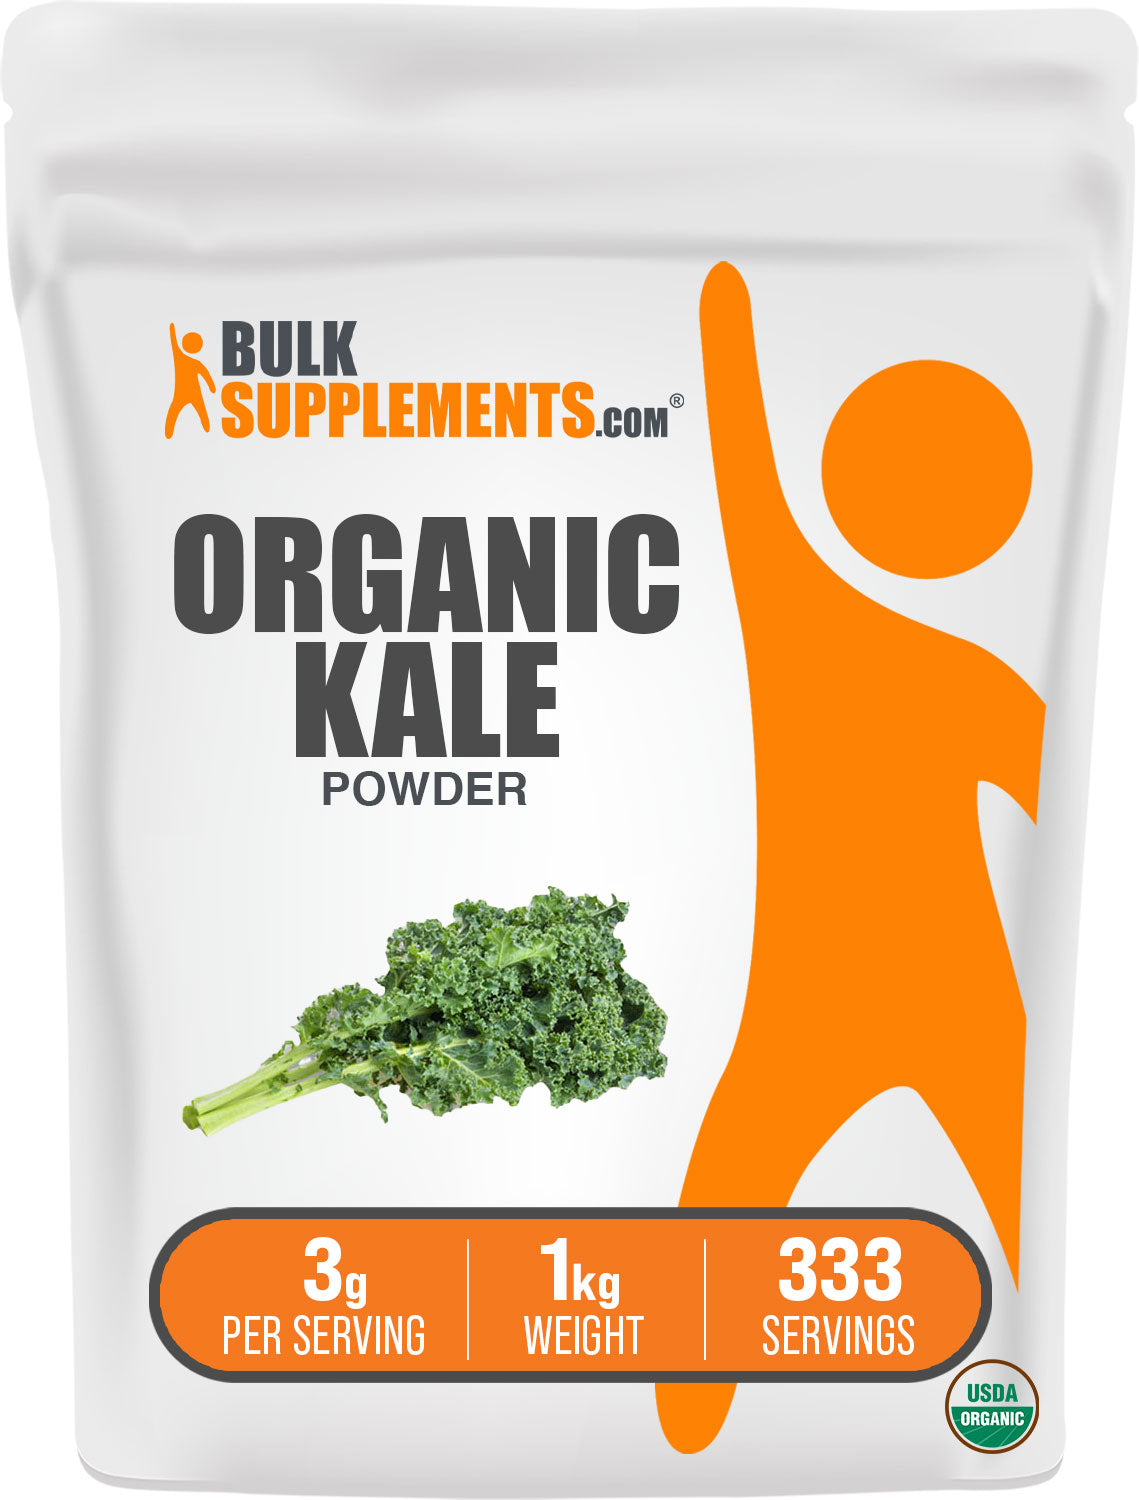 BulkSupplements.com Organic Kale Powder 1KG Bag